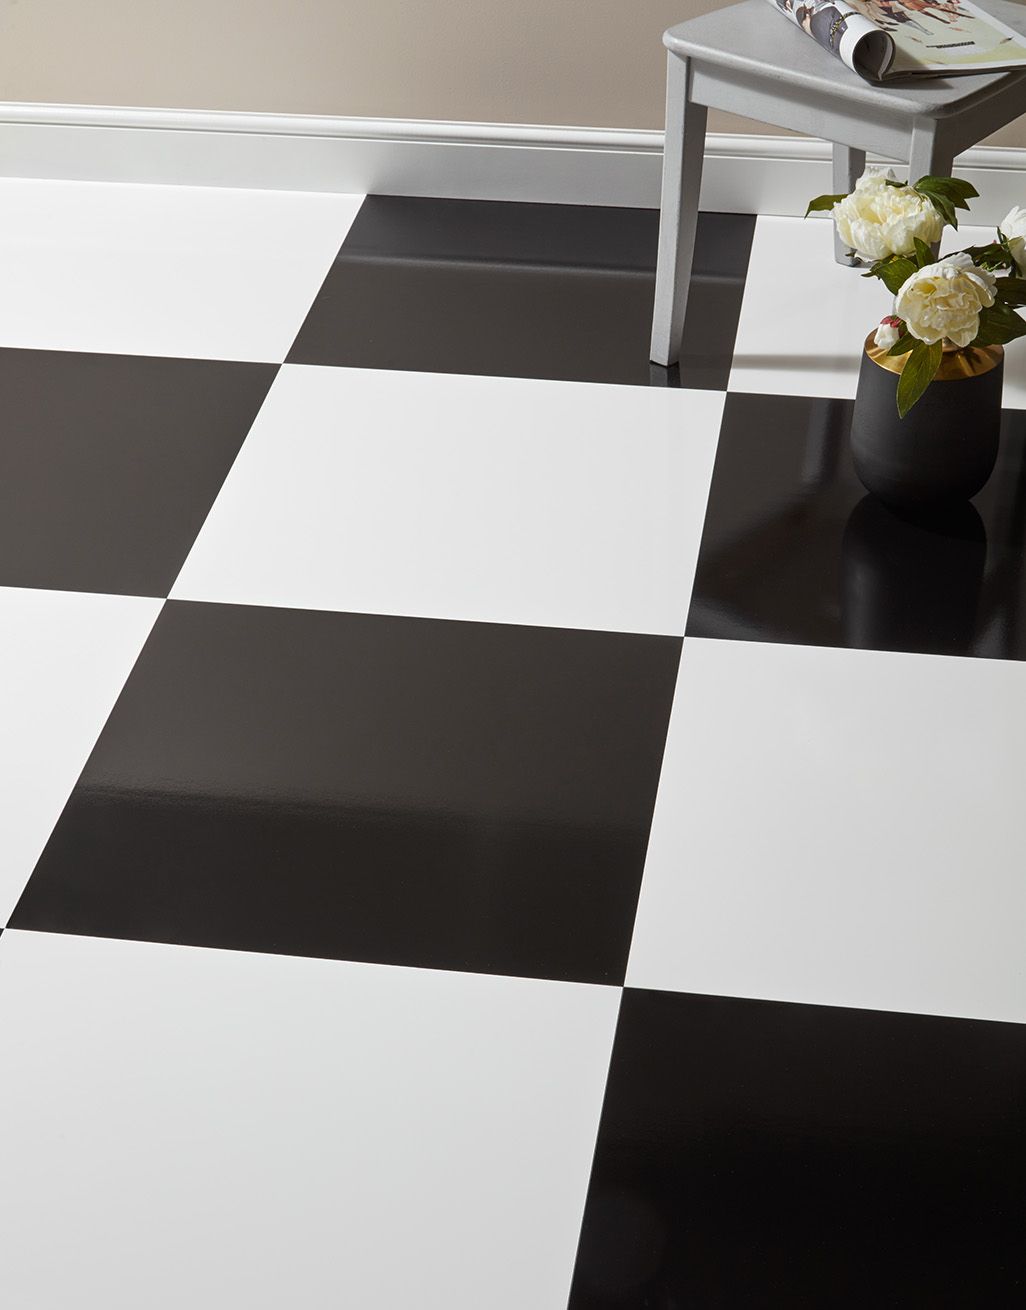 Black High Gloss Laminate Flooring, Black And White Tile Effect Laminate Flooring